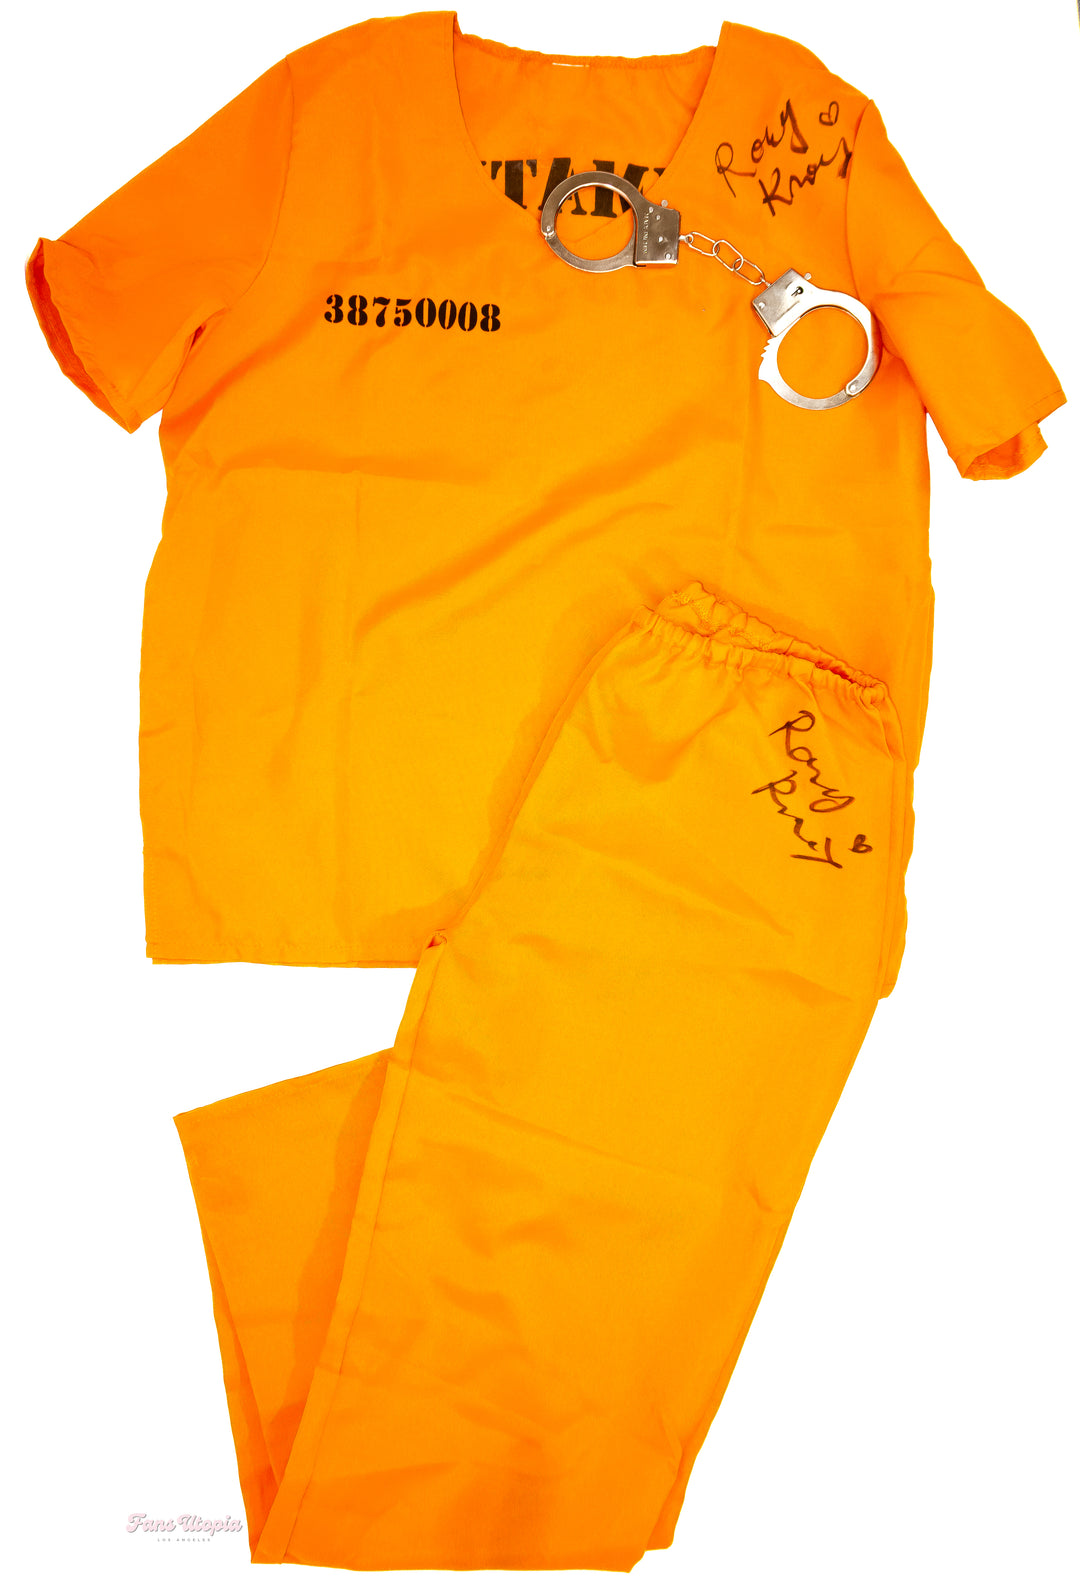 Rory Knox Autogtaphed Orange Jumpsuit + Handcuffs